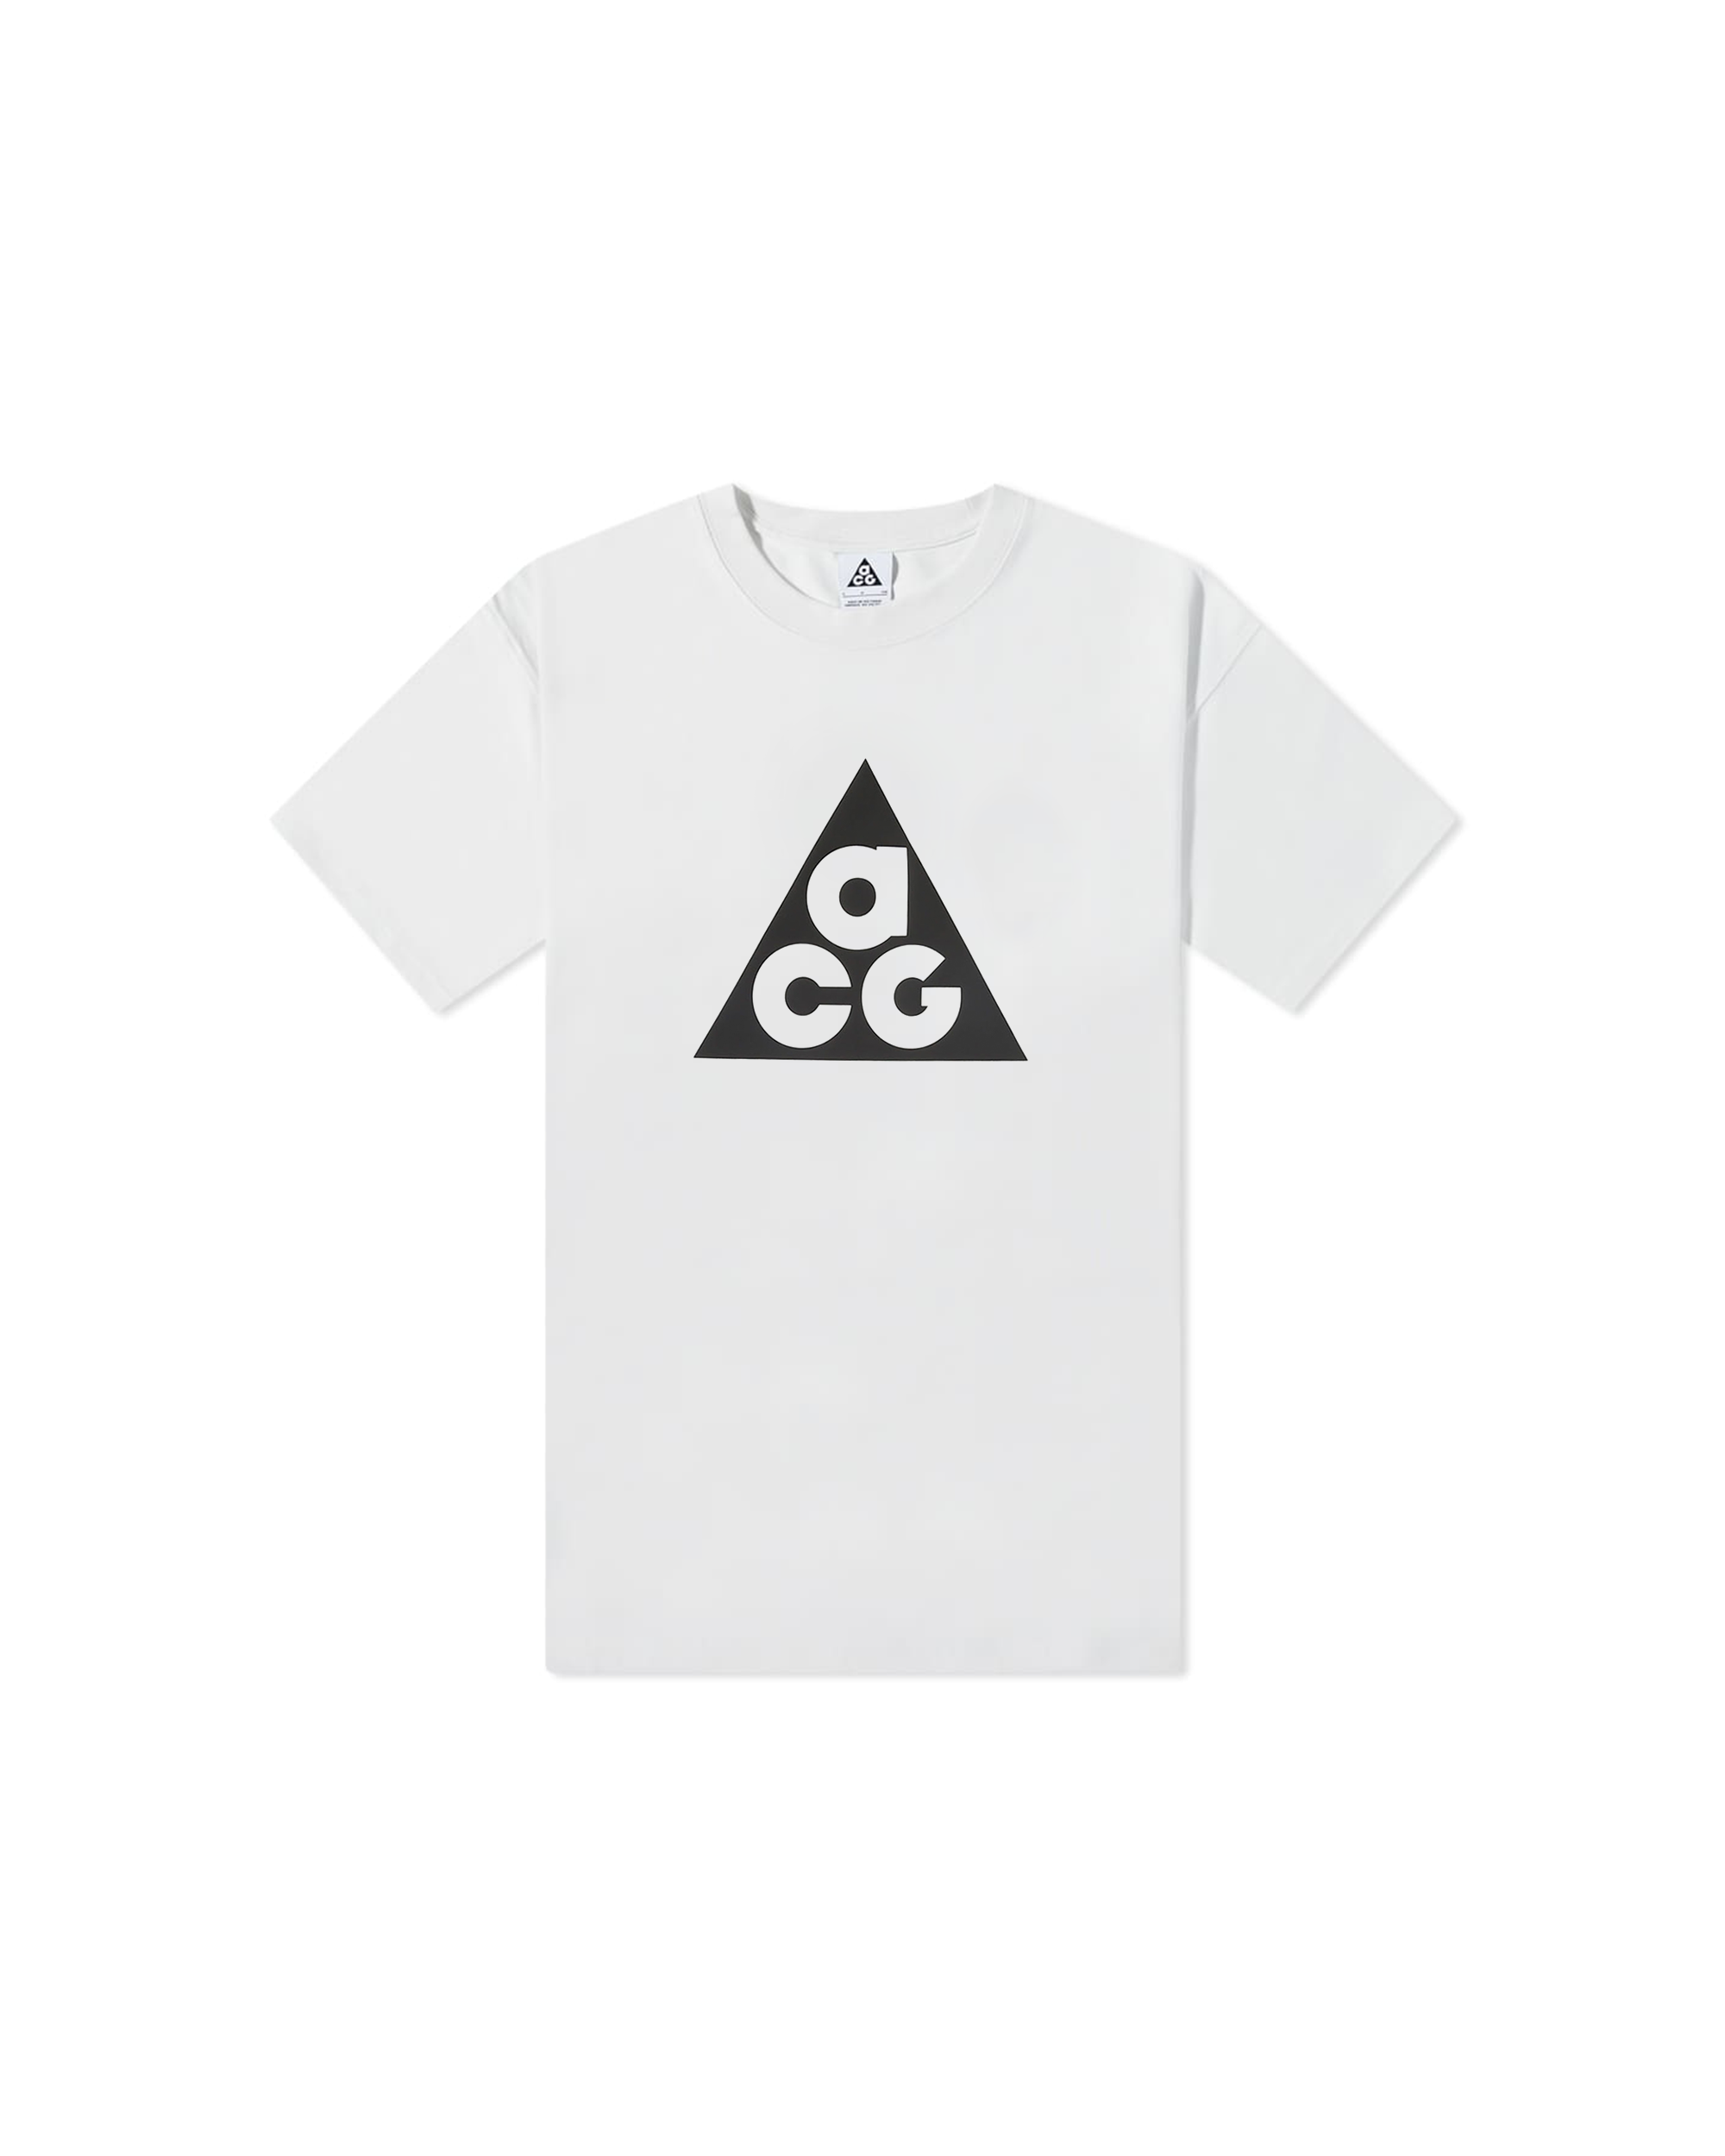 ACG Logo T-Shirt - White / Black